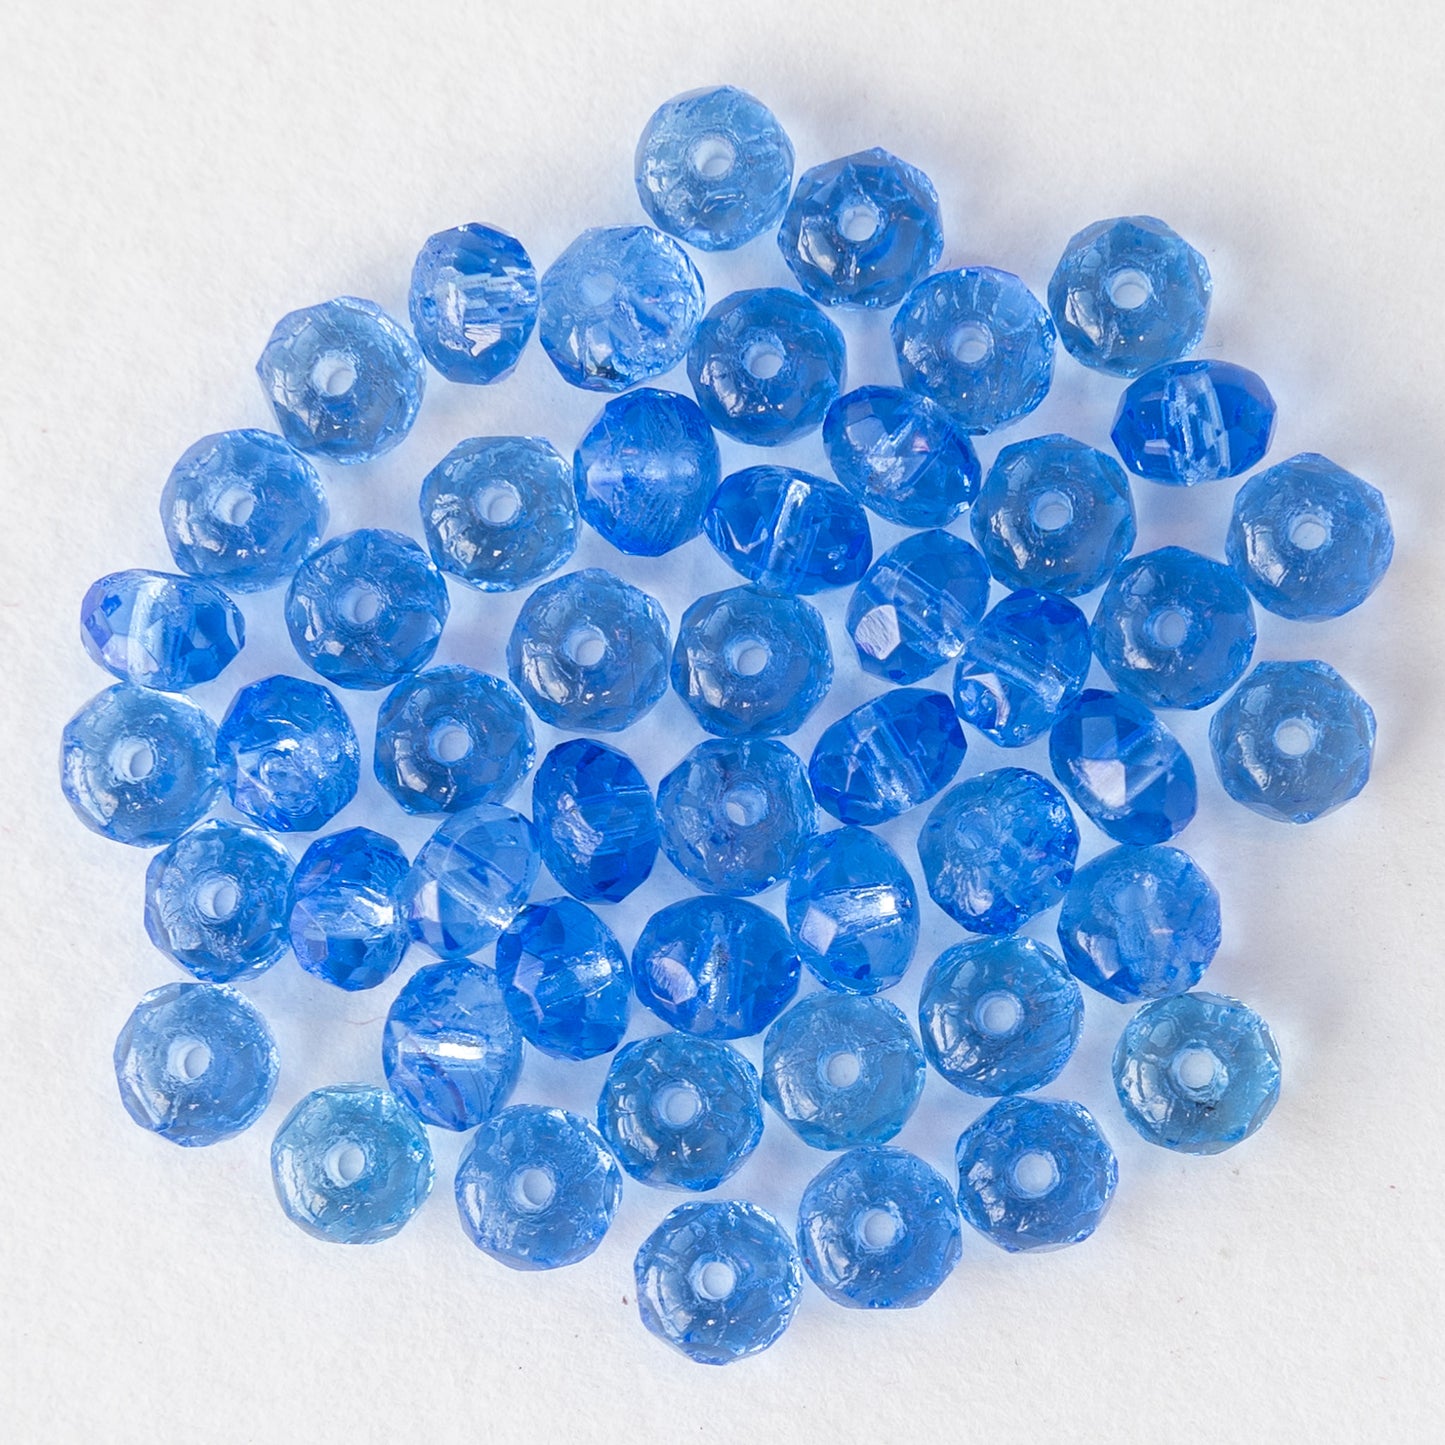 3x5mm Firepolished Rondelles - Light Sapphire - 100 Beads